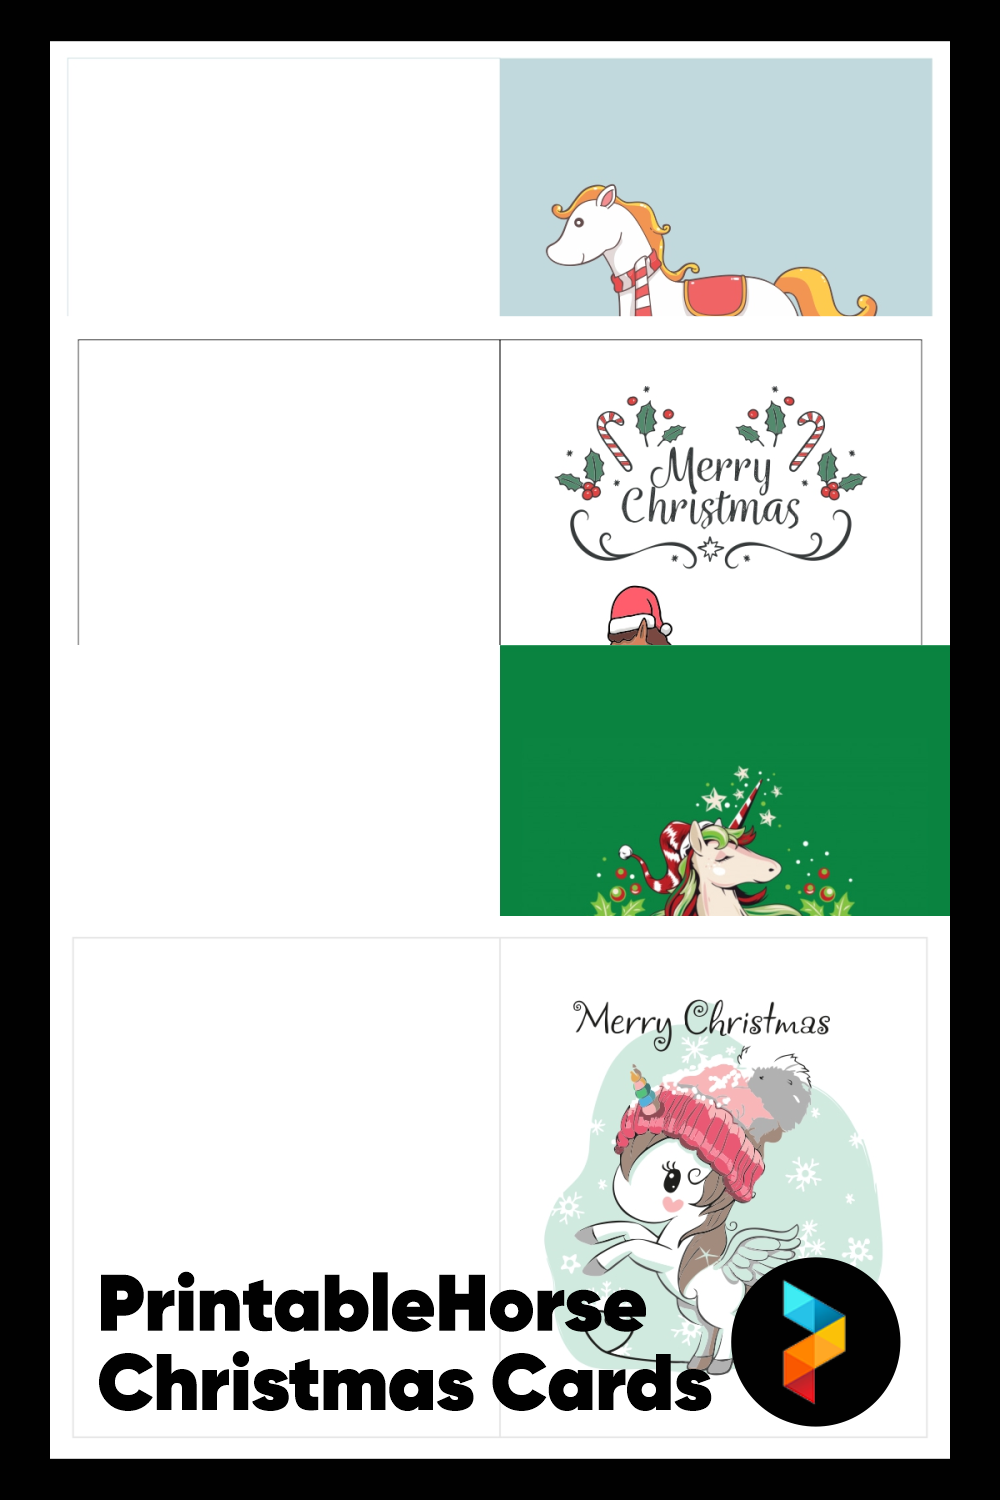 Printable Horse Christmas Cards